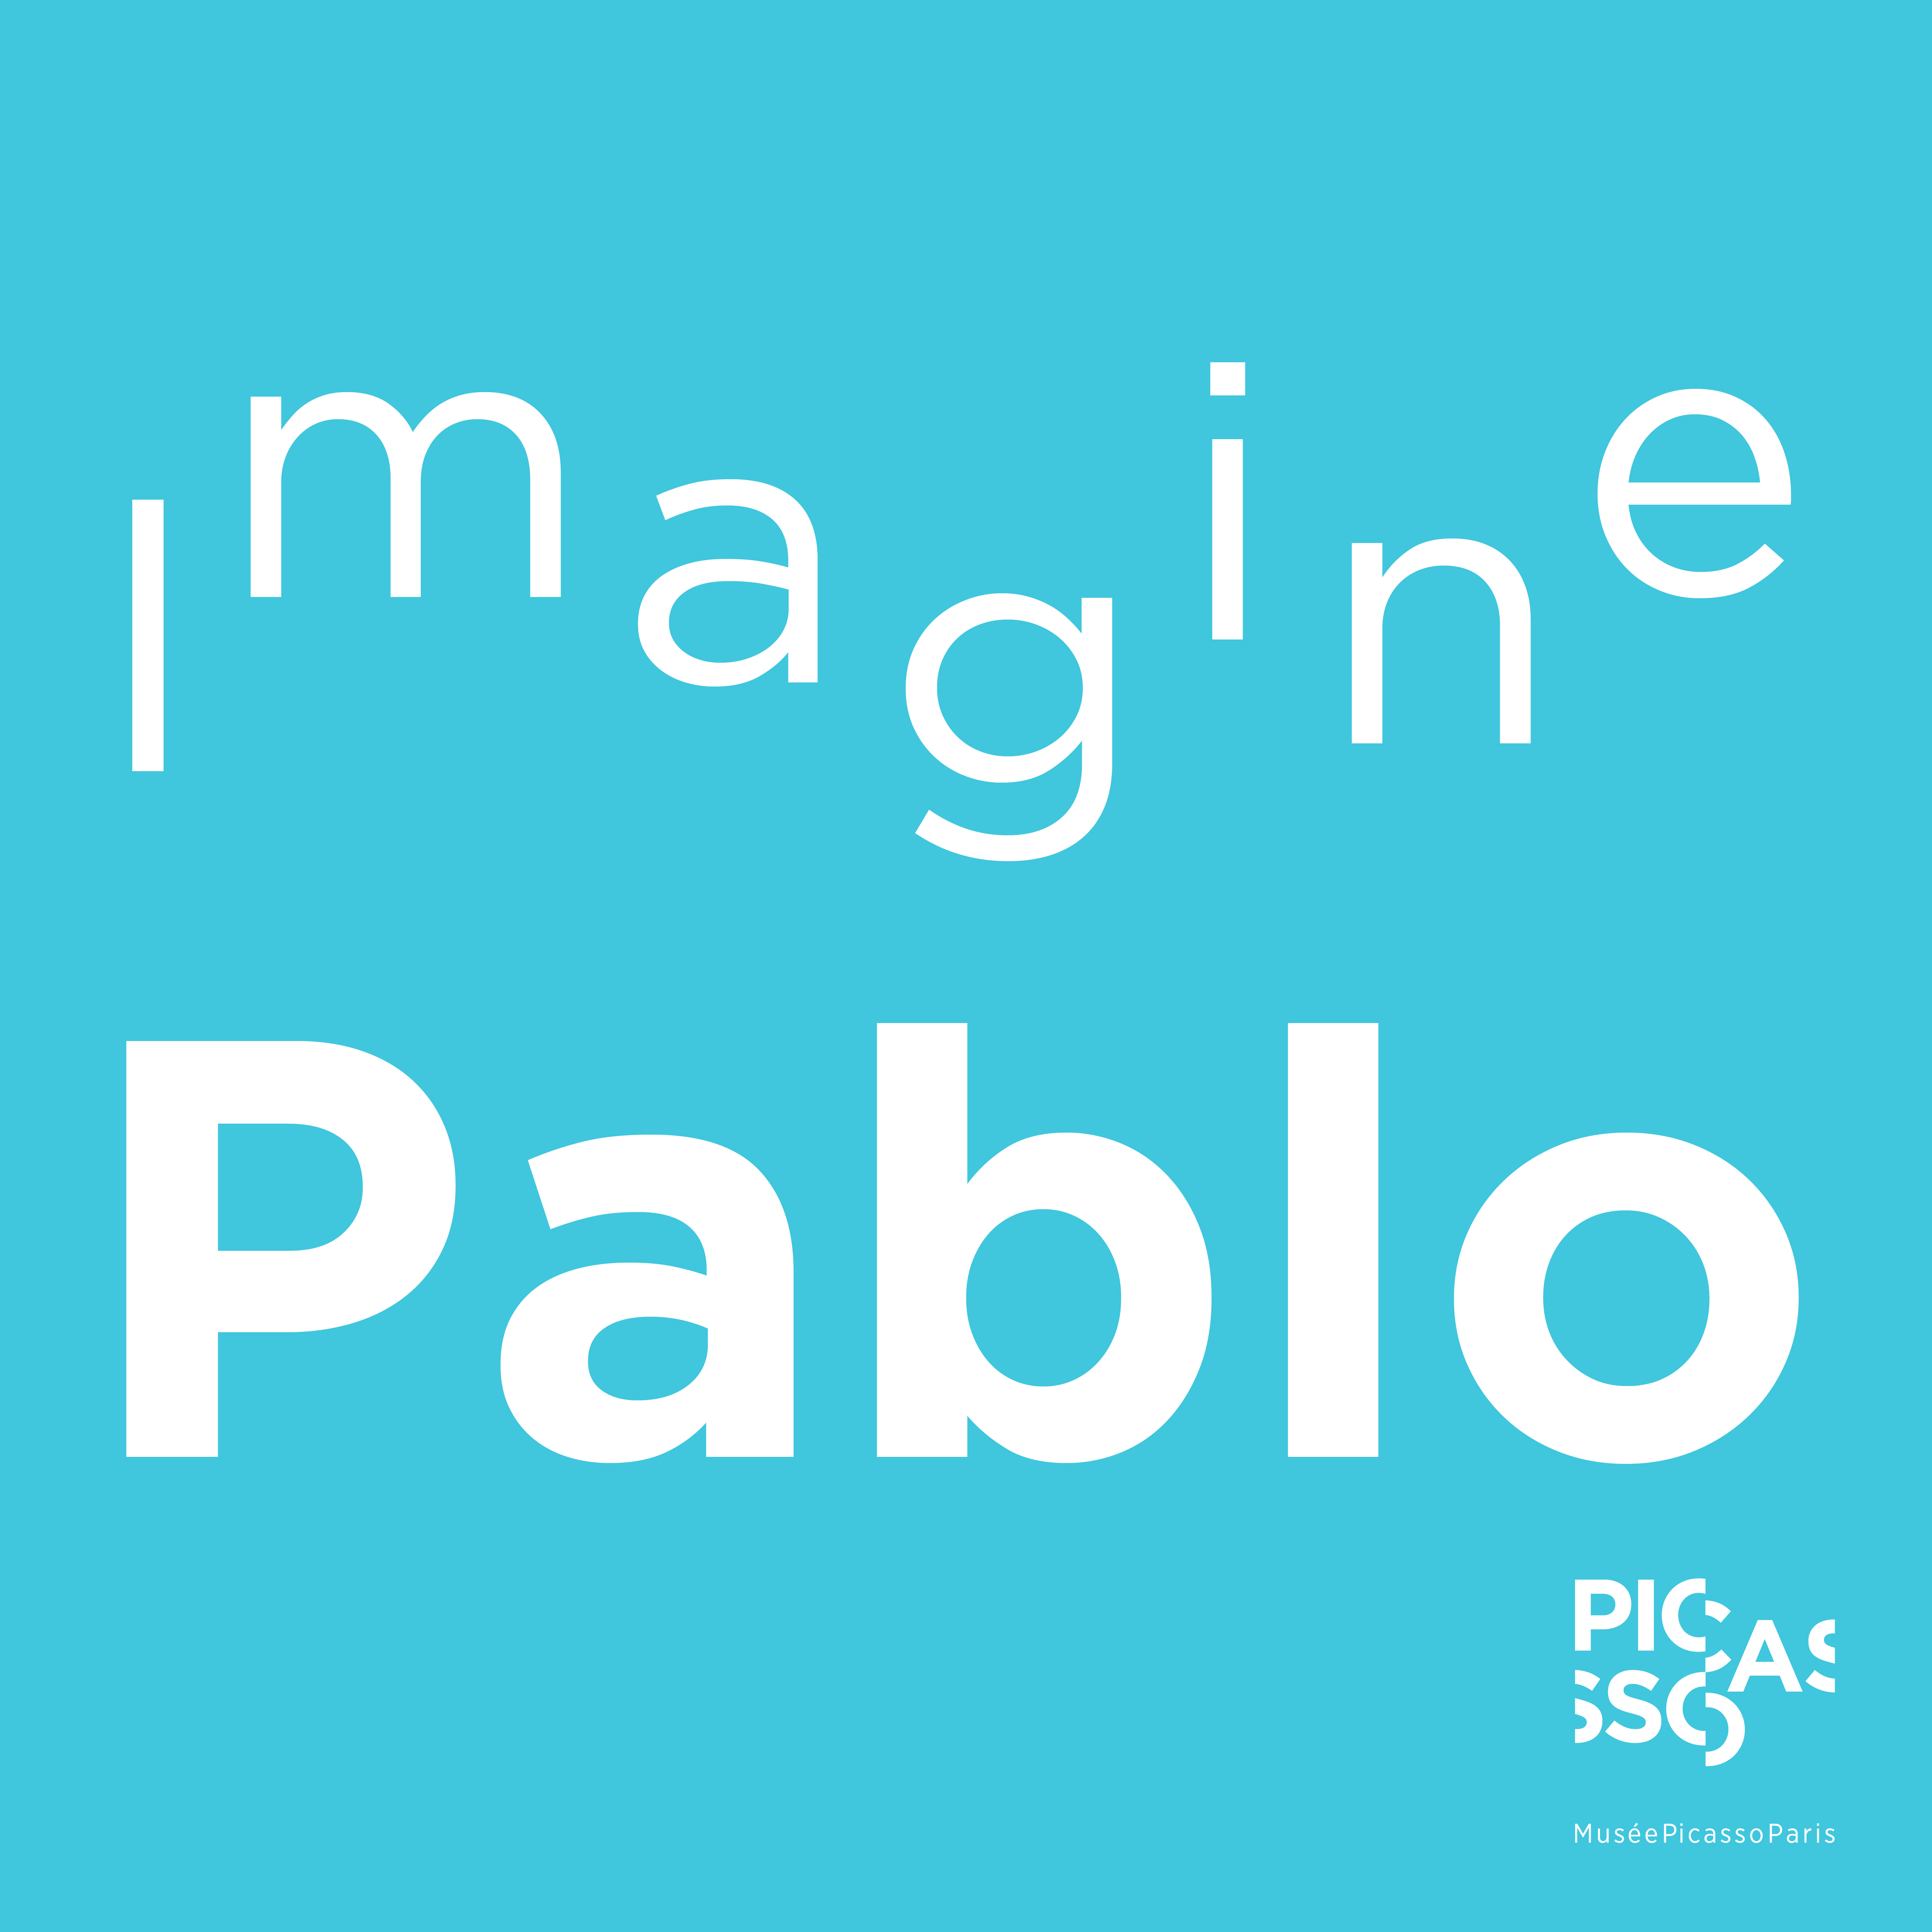 Imagine Pablo - Logo saison 3